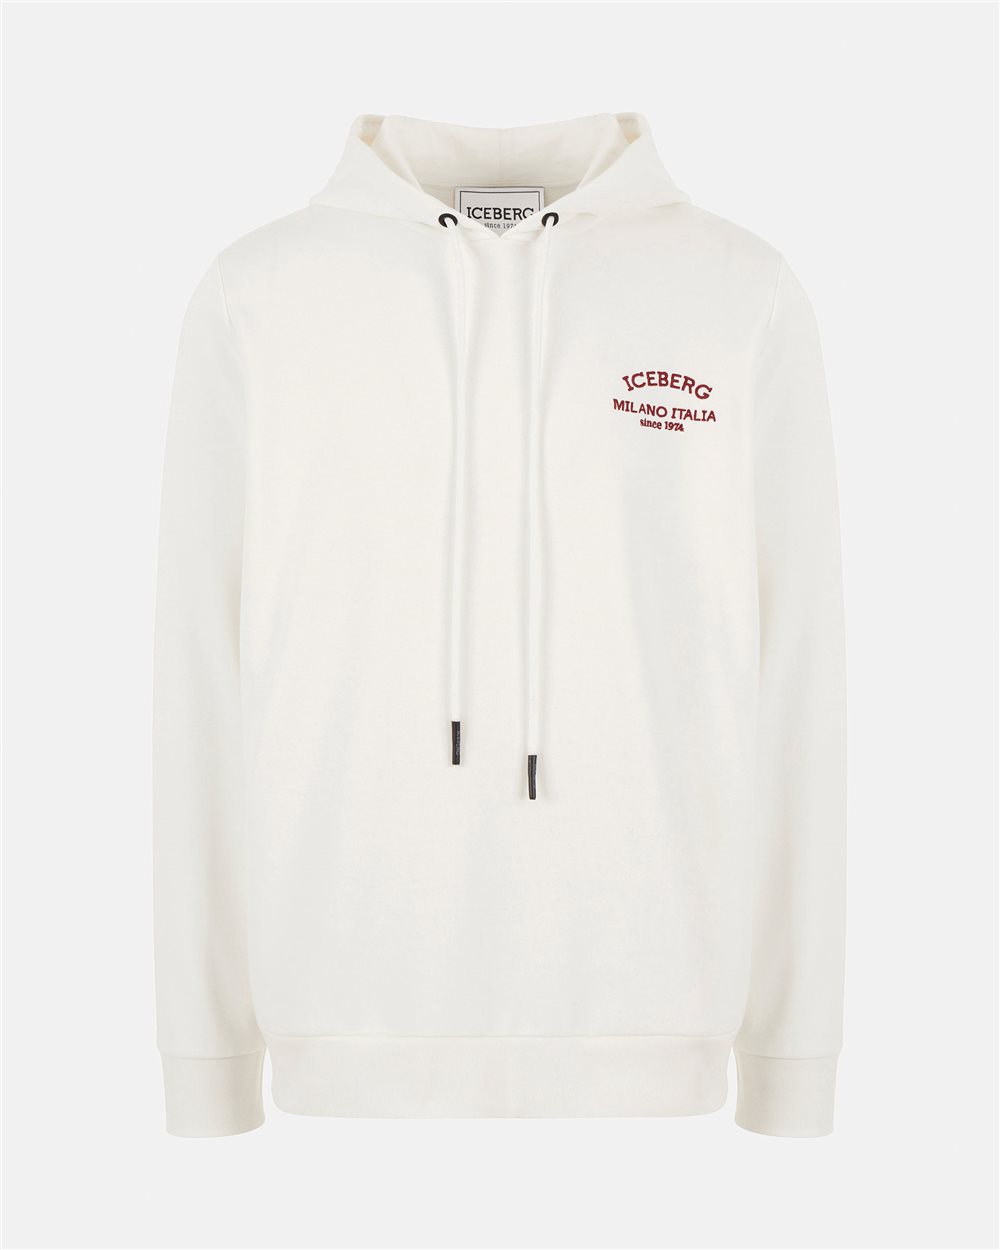 Hooded sweatshirt with logo - Iceberg - Official Website